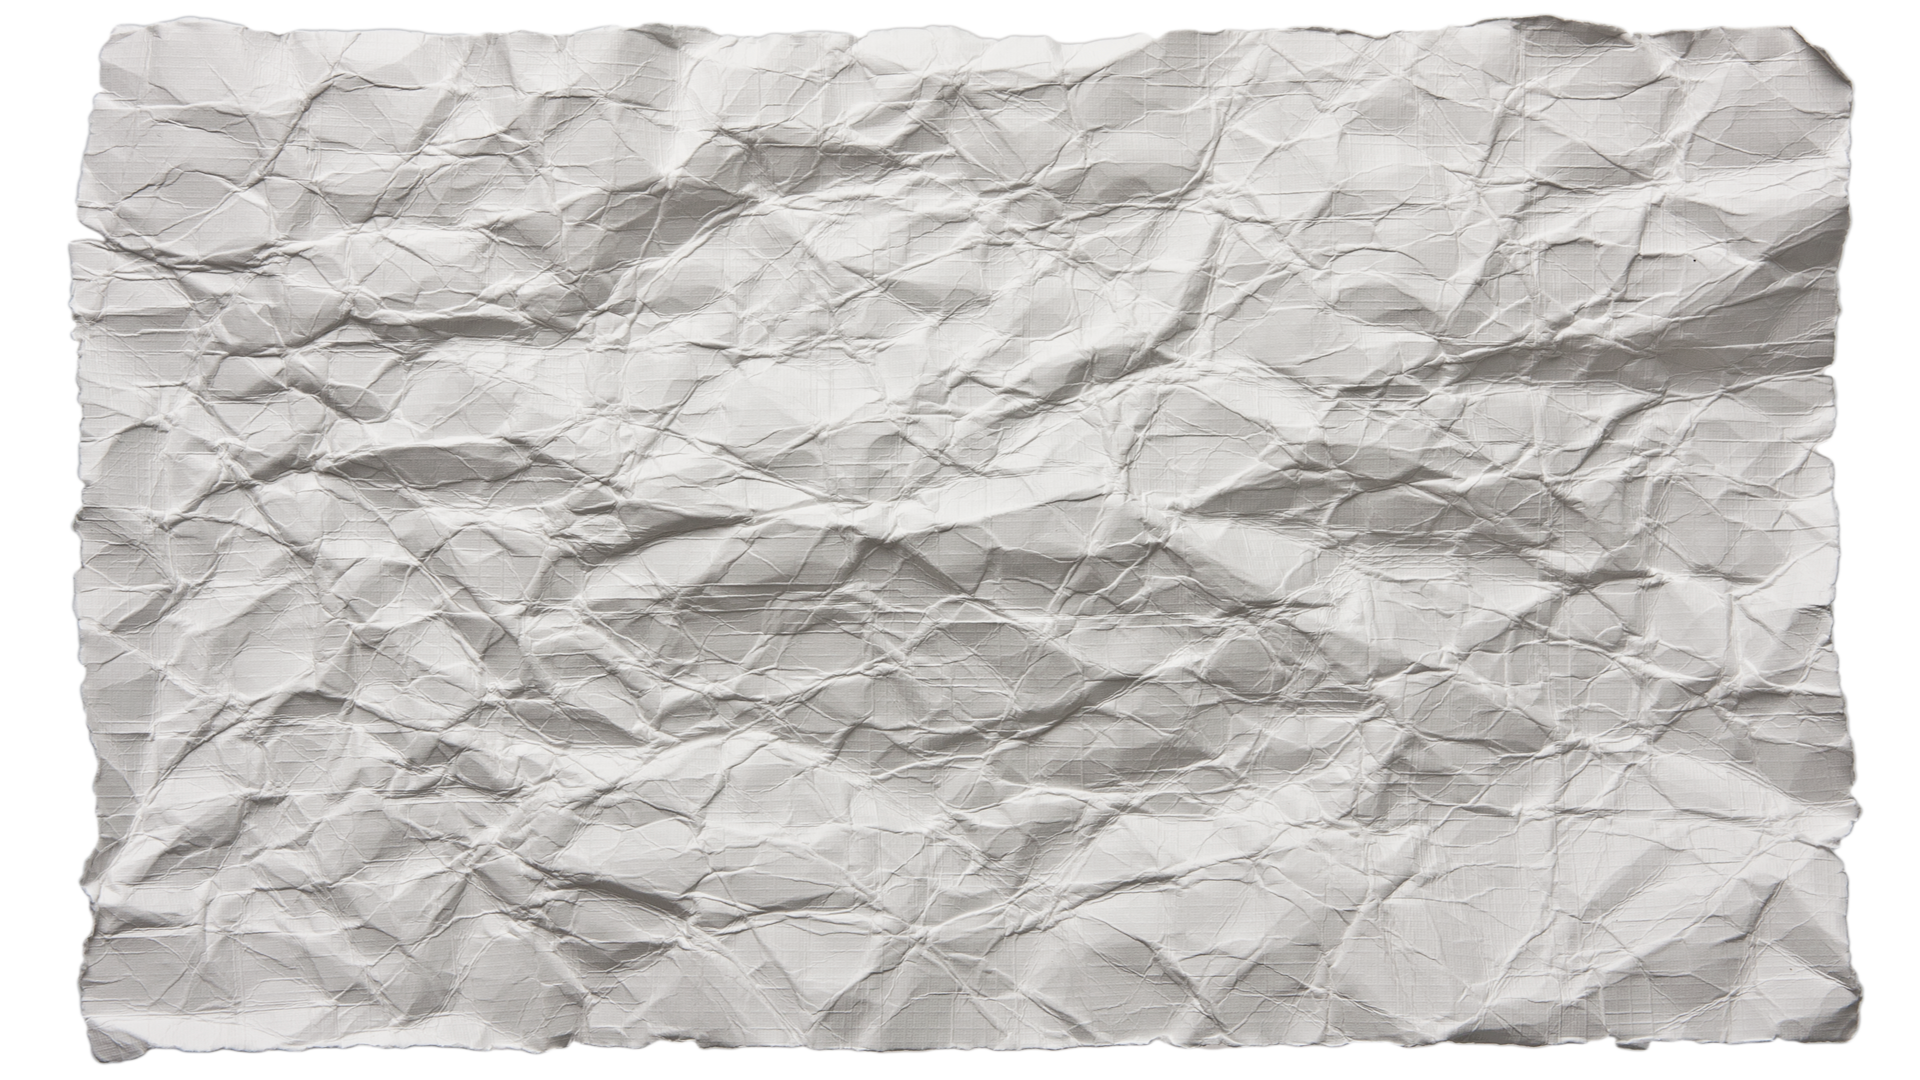 Wrinkled paper wallpaper | Wallpaper Wide HD